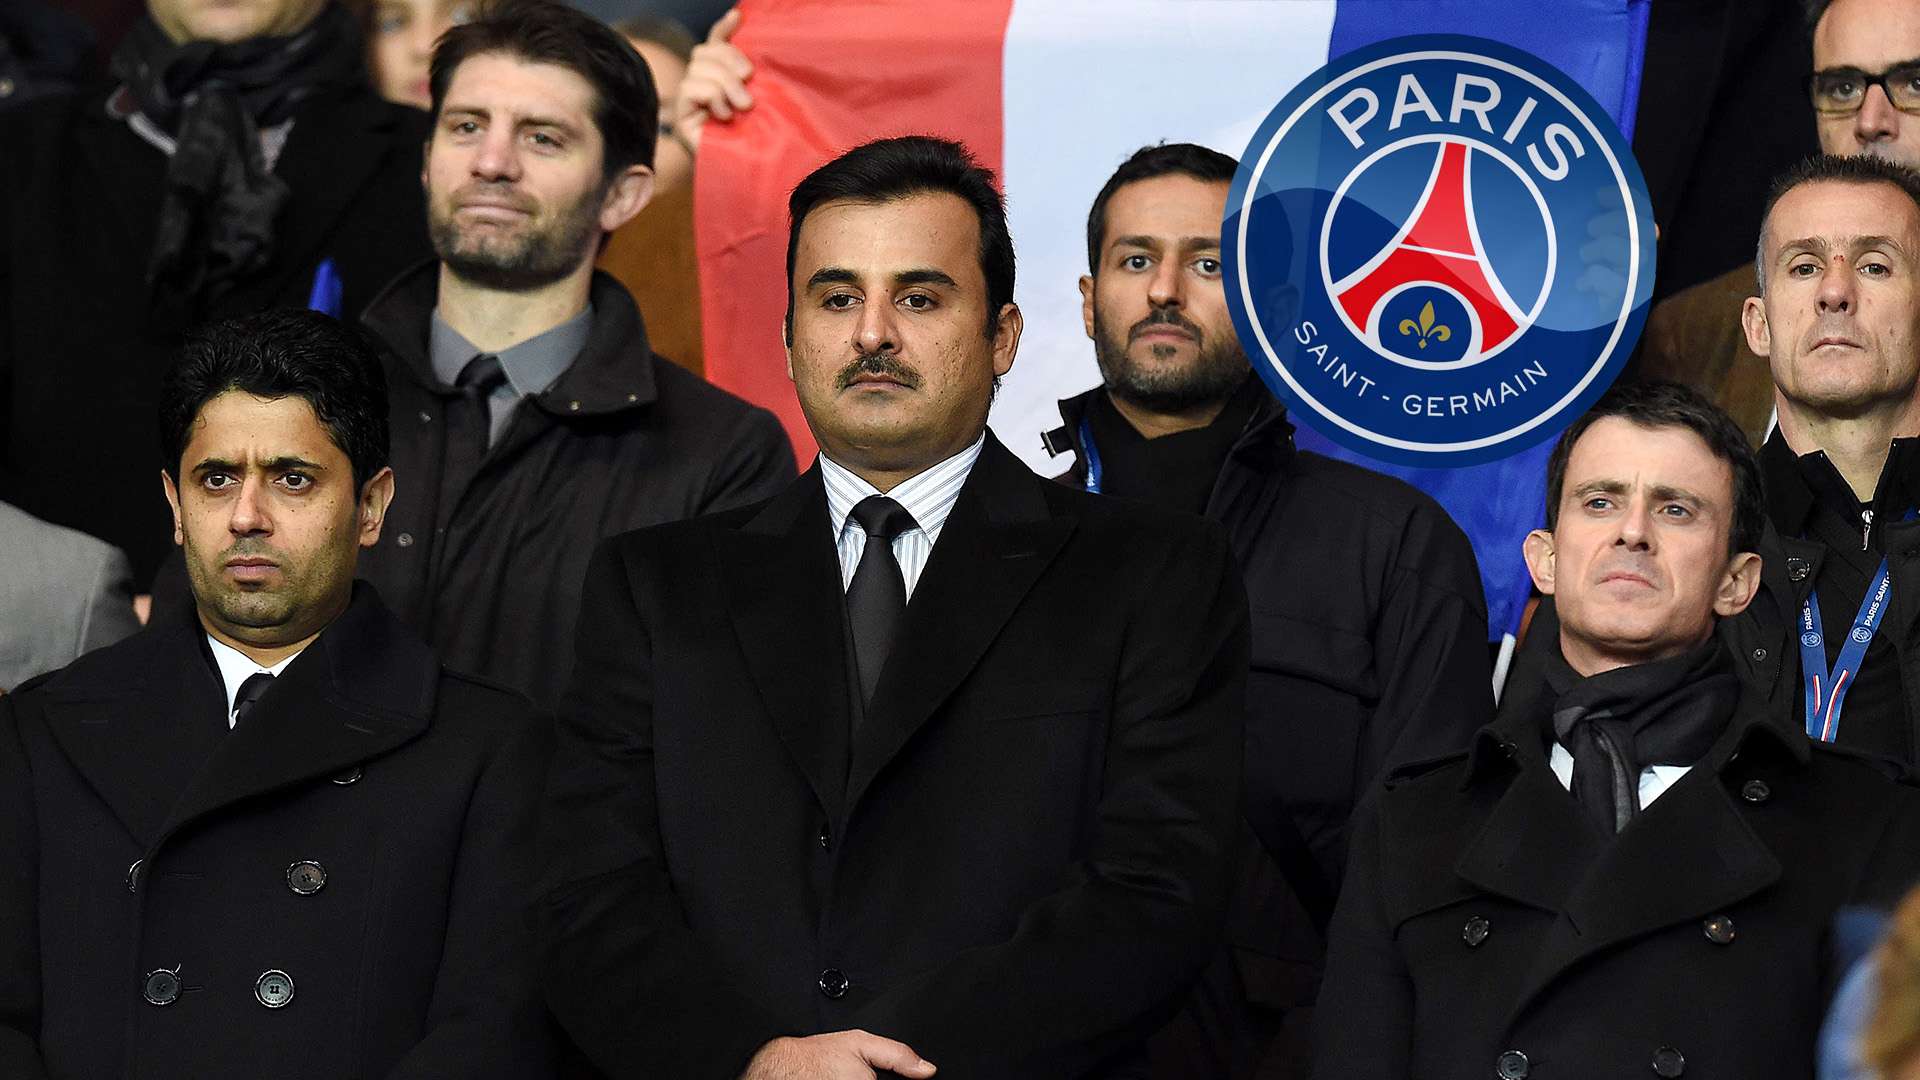 Tamim bin Hamad Al Thani | Emir of Qatar, youngest current sovereign worldwide | Paris Saint-Germain owner